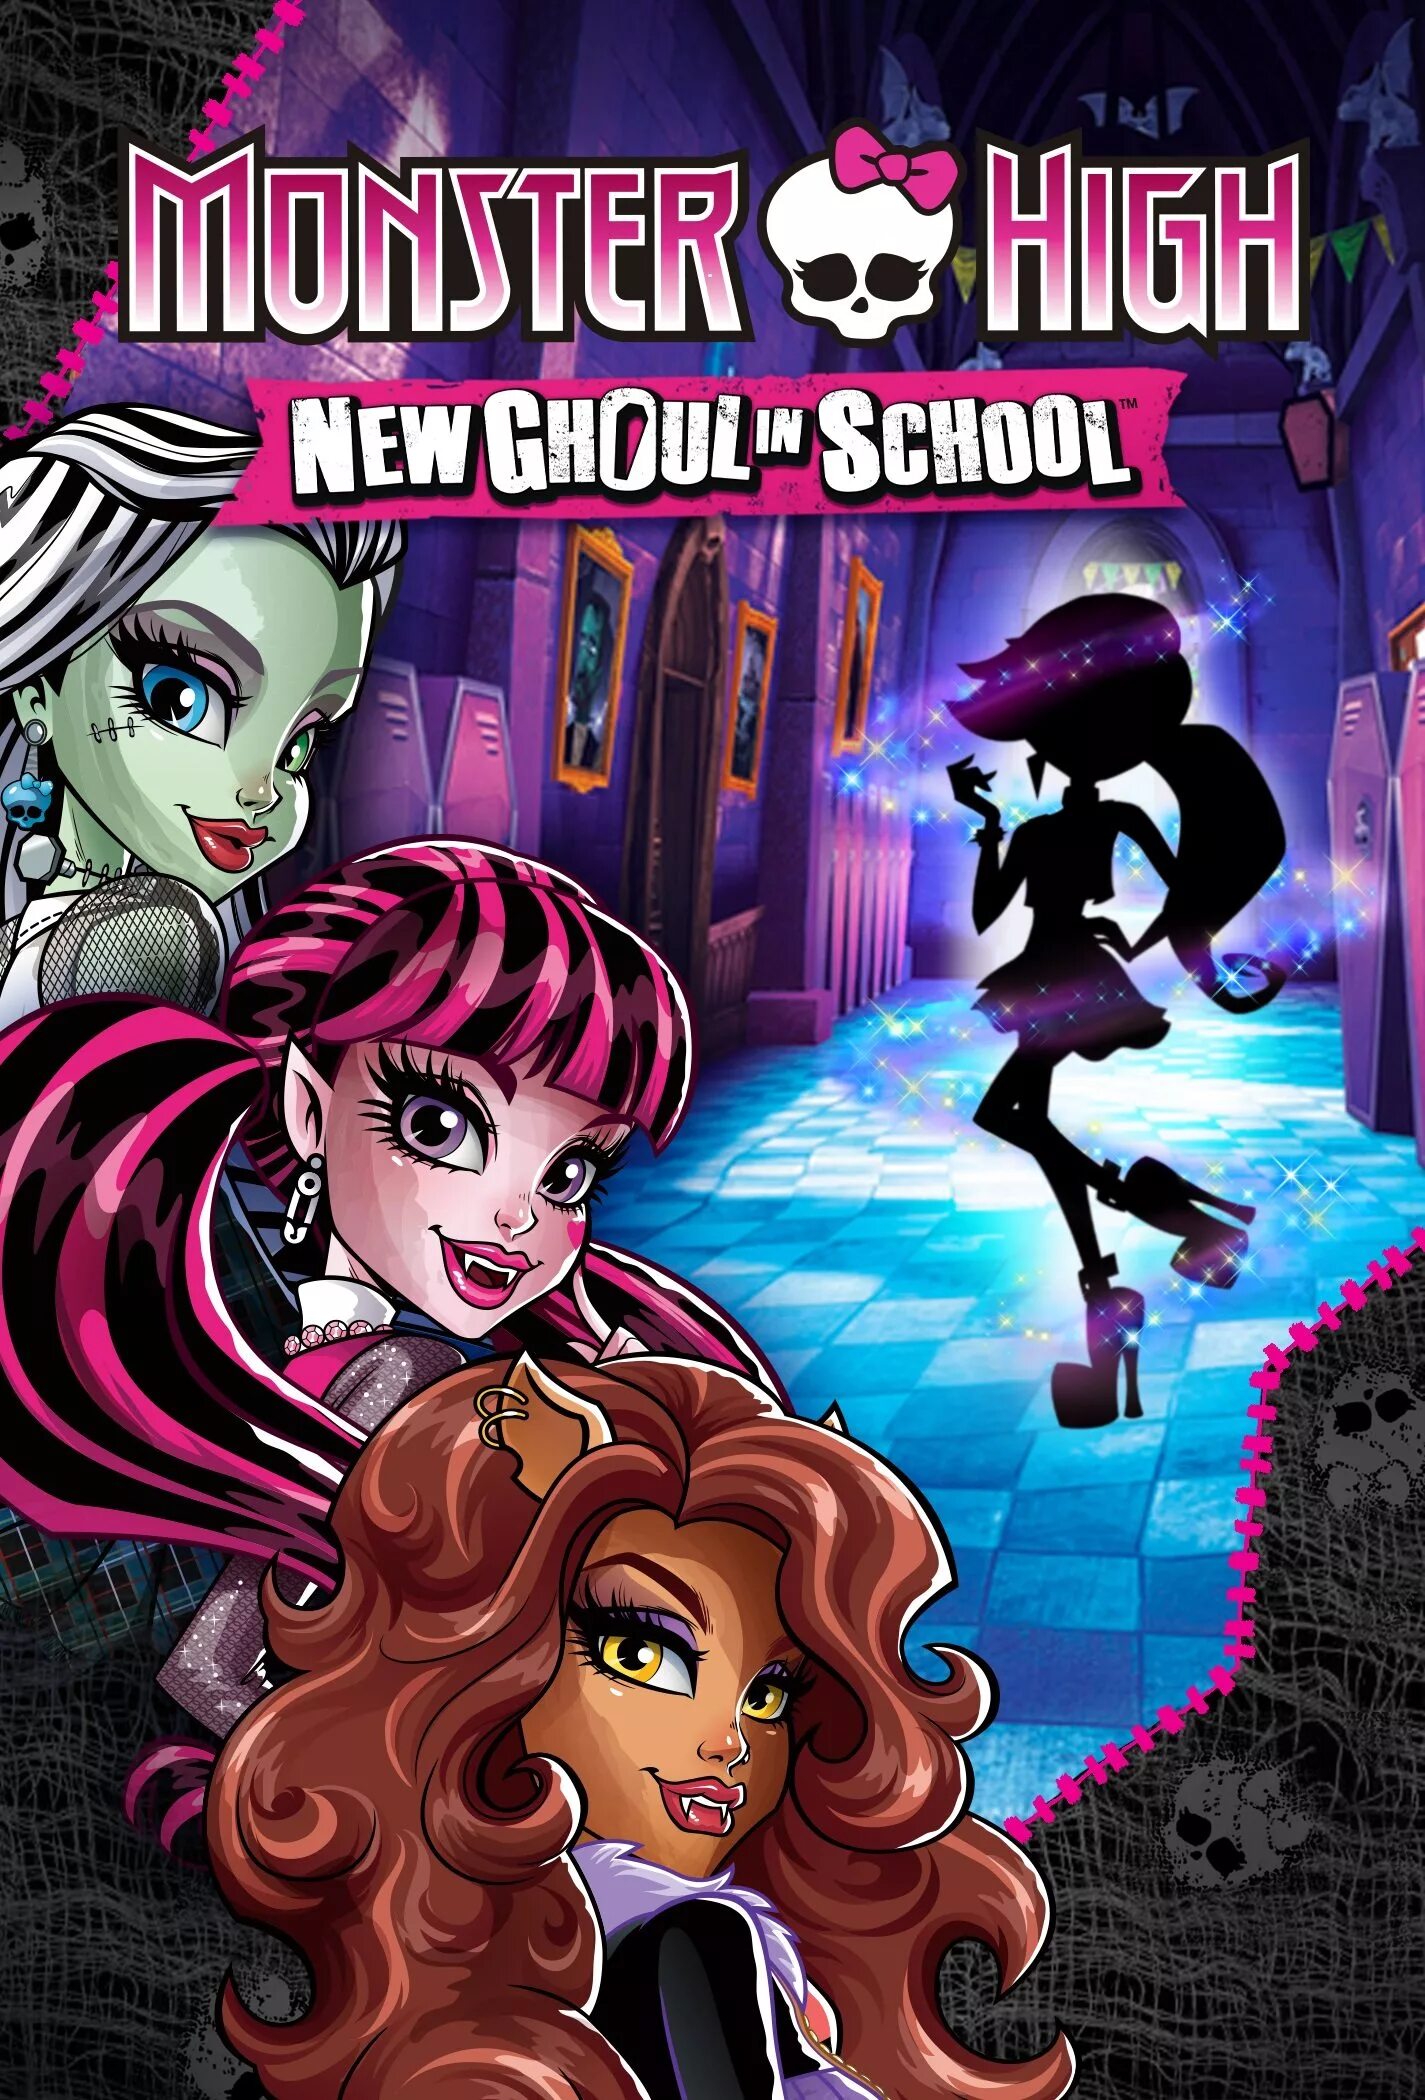 New ghoul school. Игра Monster High New Ghoul. Монстер Хай новая нечисть школы. Monster High New Ghoul in School. Барби Xbox 360.